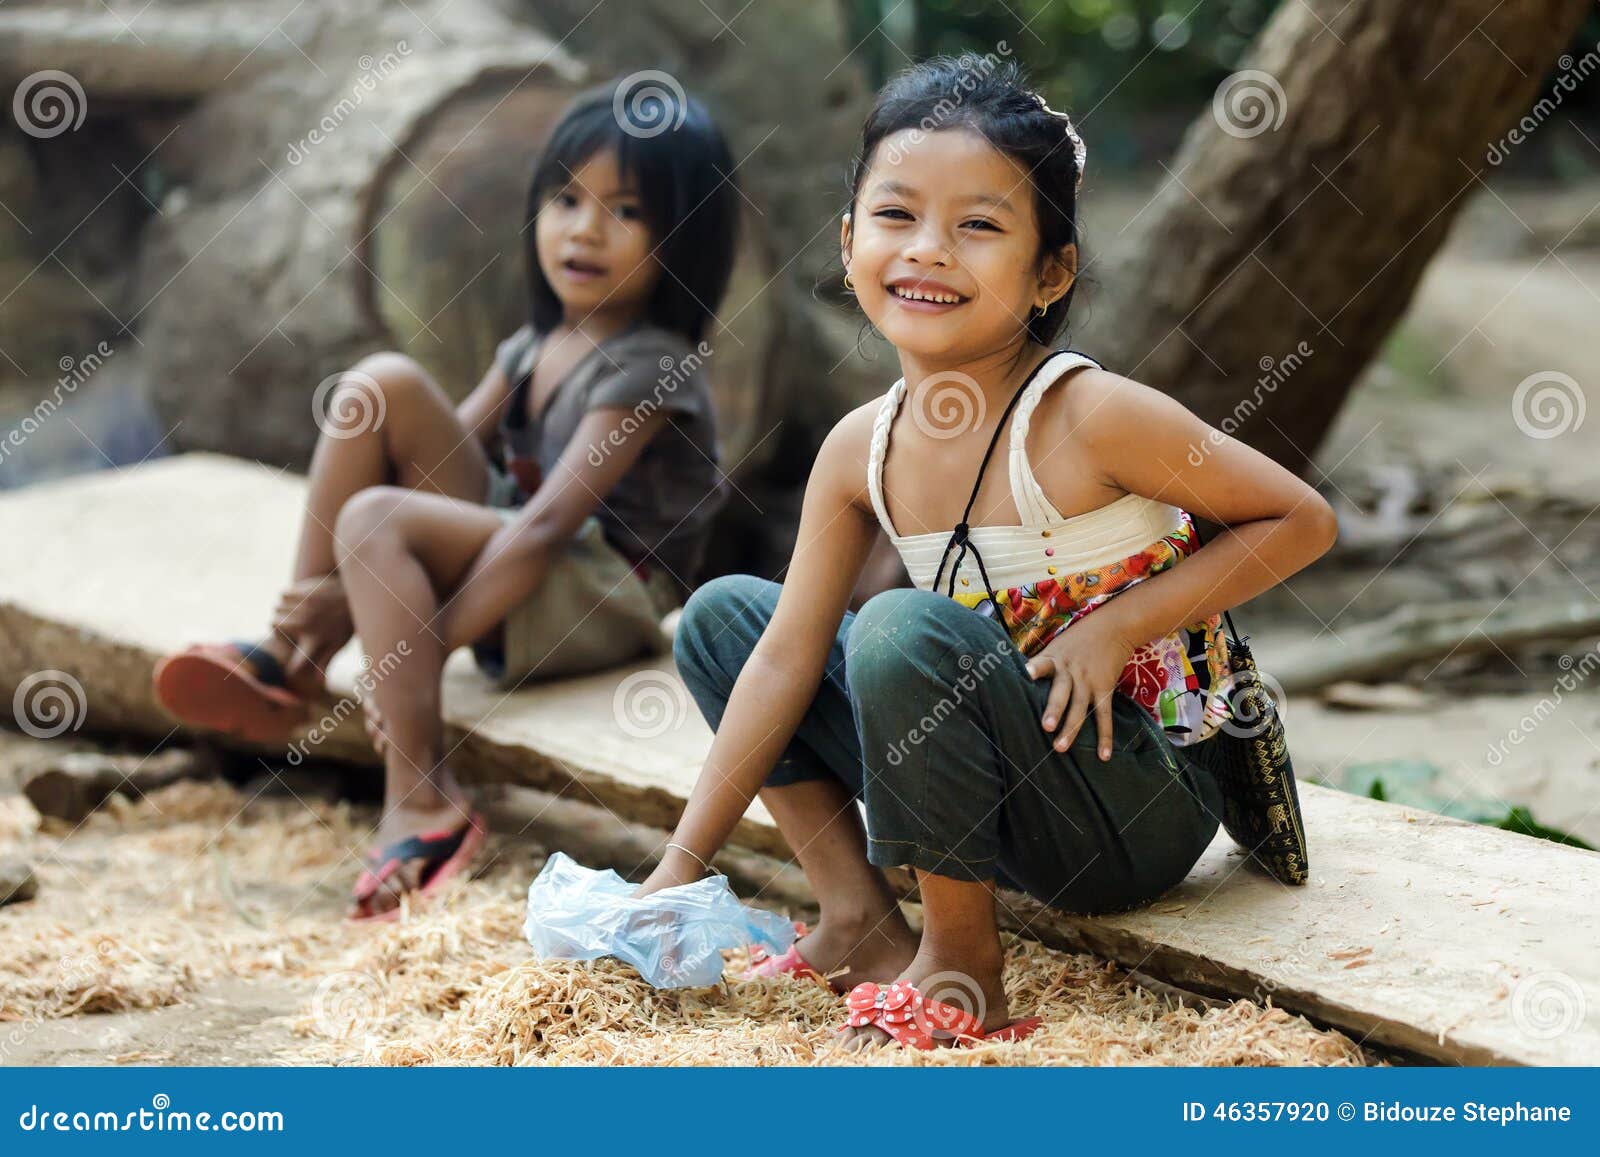 Cambodian Teen Image 9